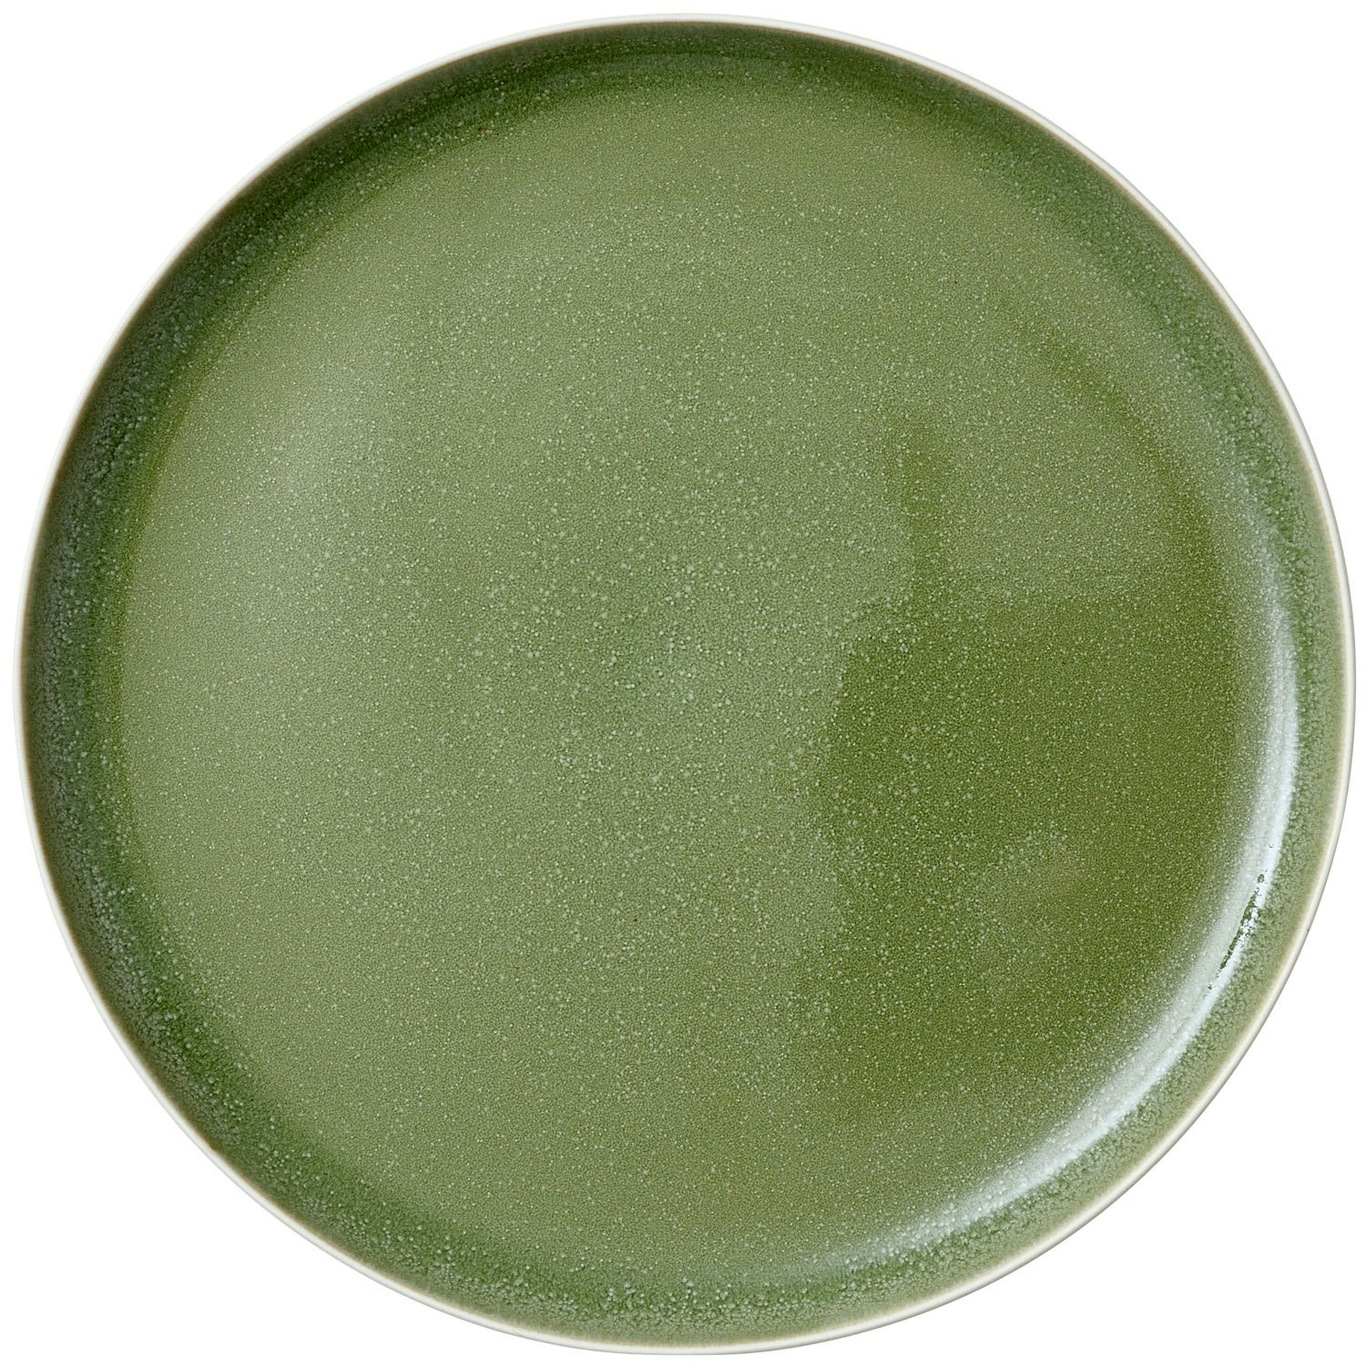 North Plate 27 cm, Matte White/Shiny Moss